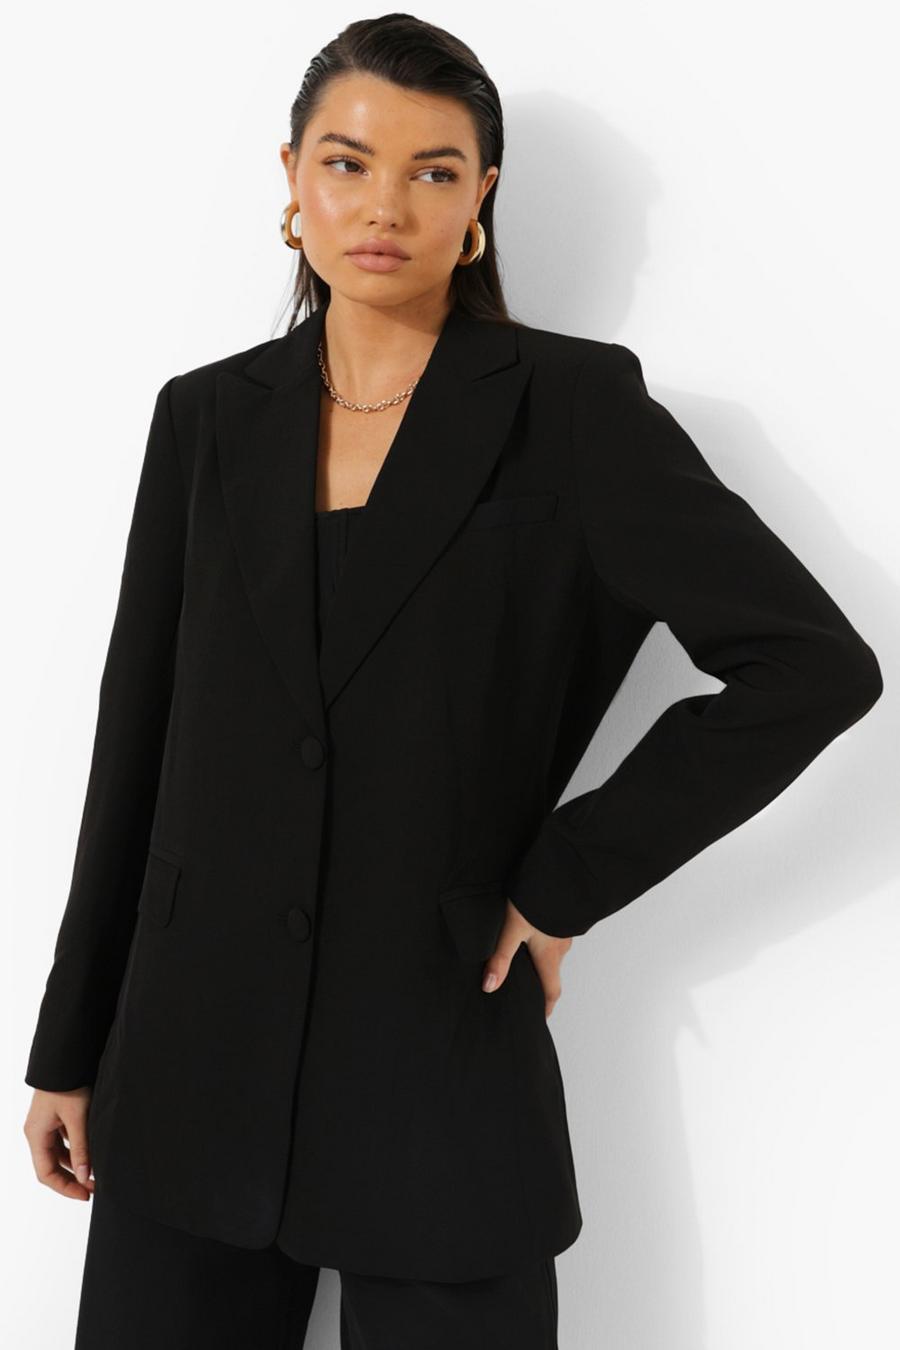 https://media.boohoo.com/i/boohoo/fzz13842_black_xl/female-black-tailored-oversized-blazer/?w=900&qlt=default&fmt.jp2.qlt=70&fmt=auto&sm=fit